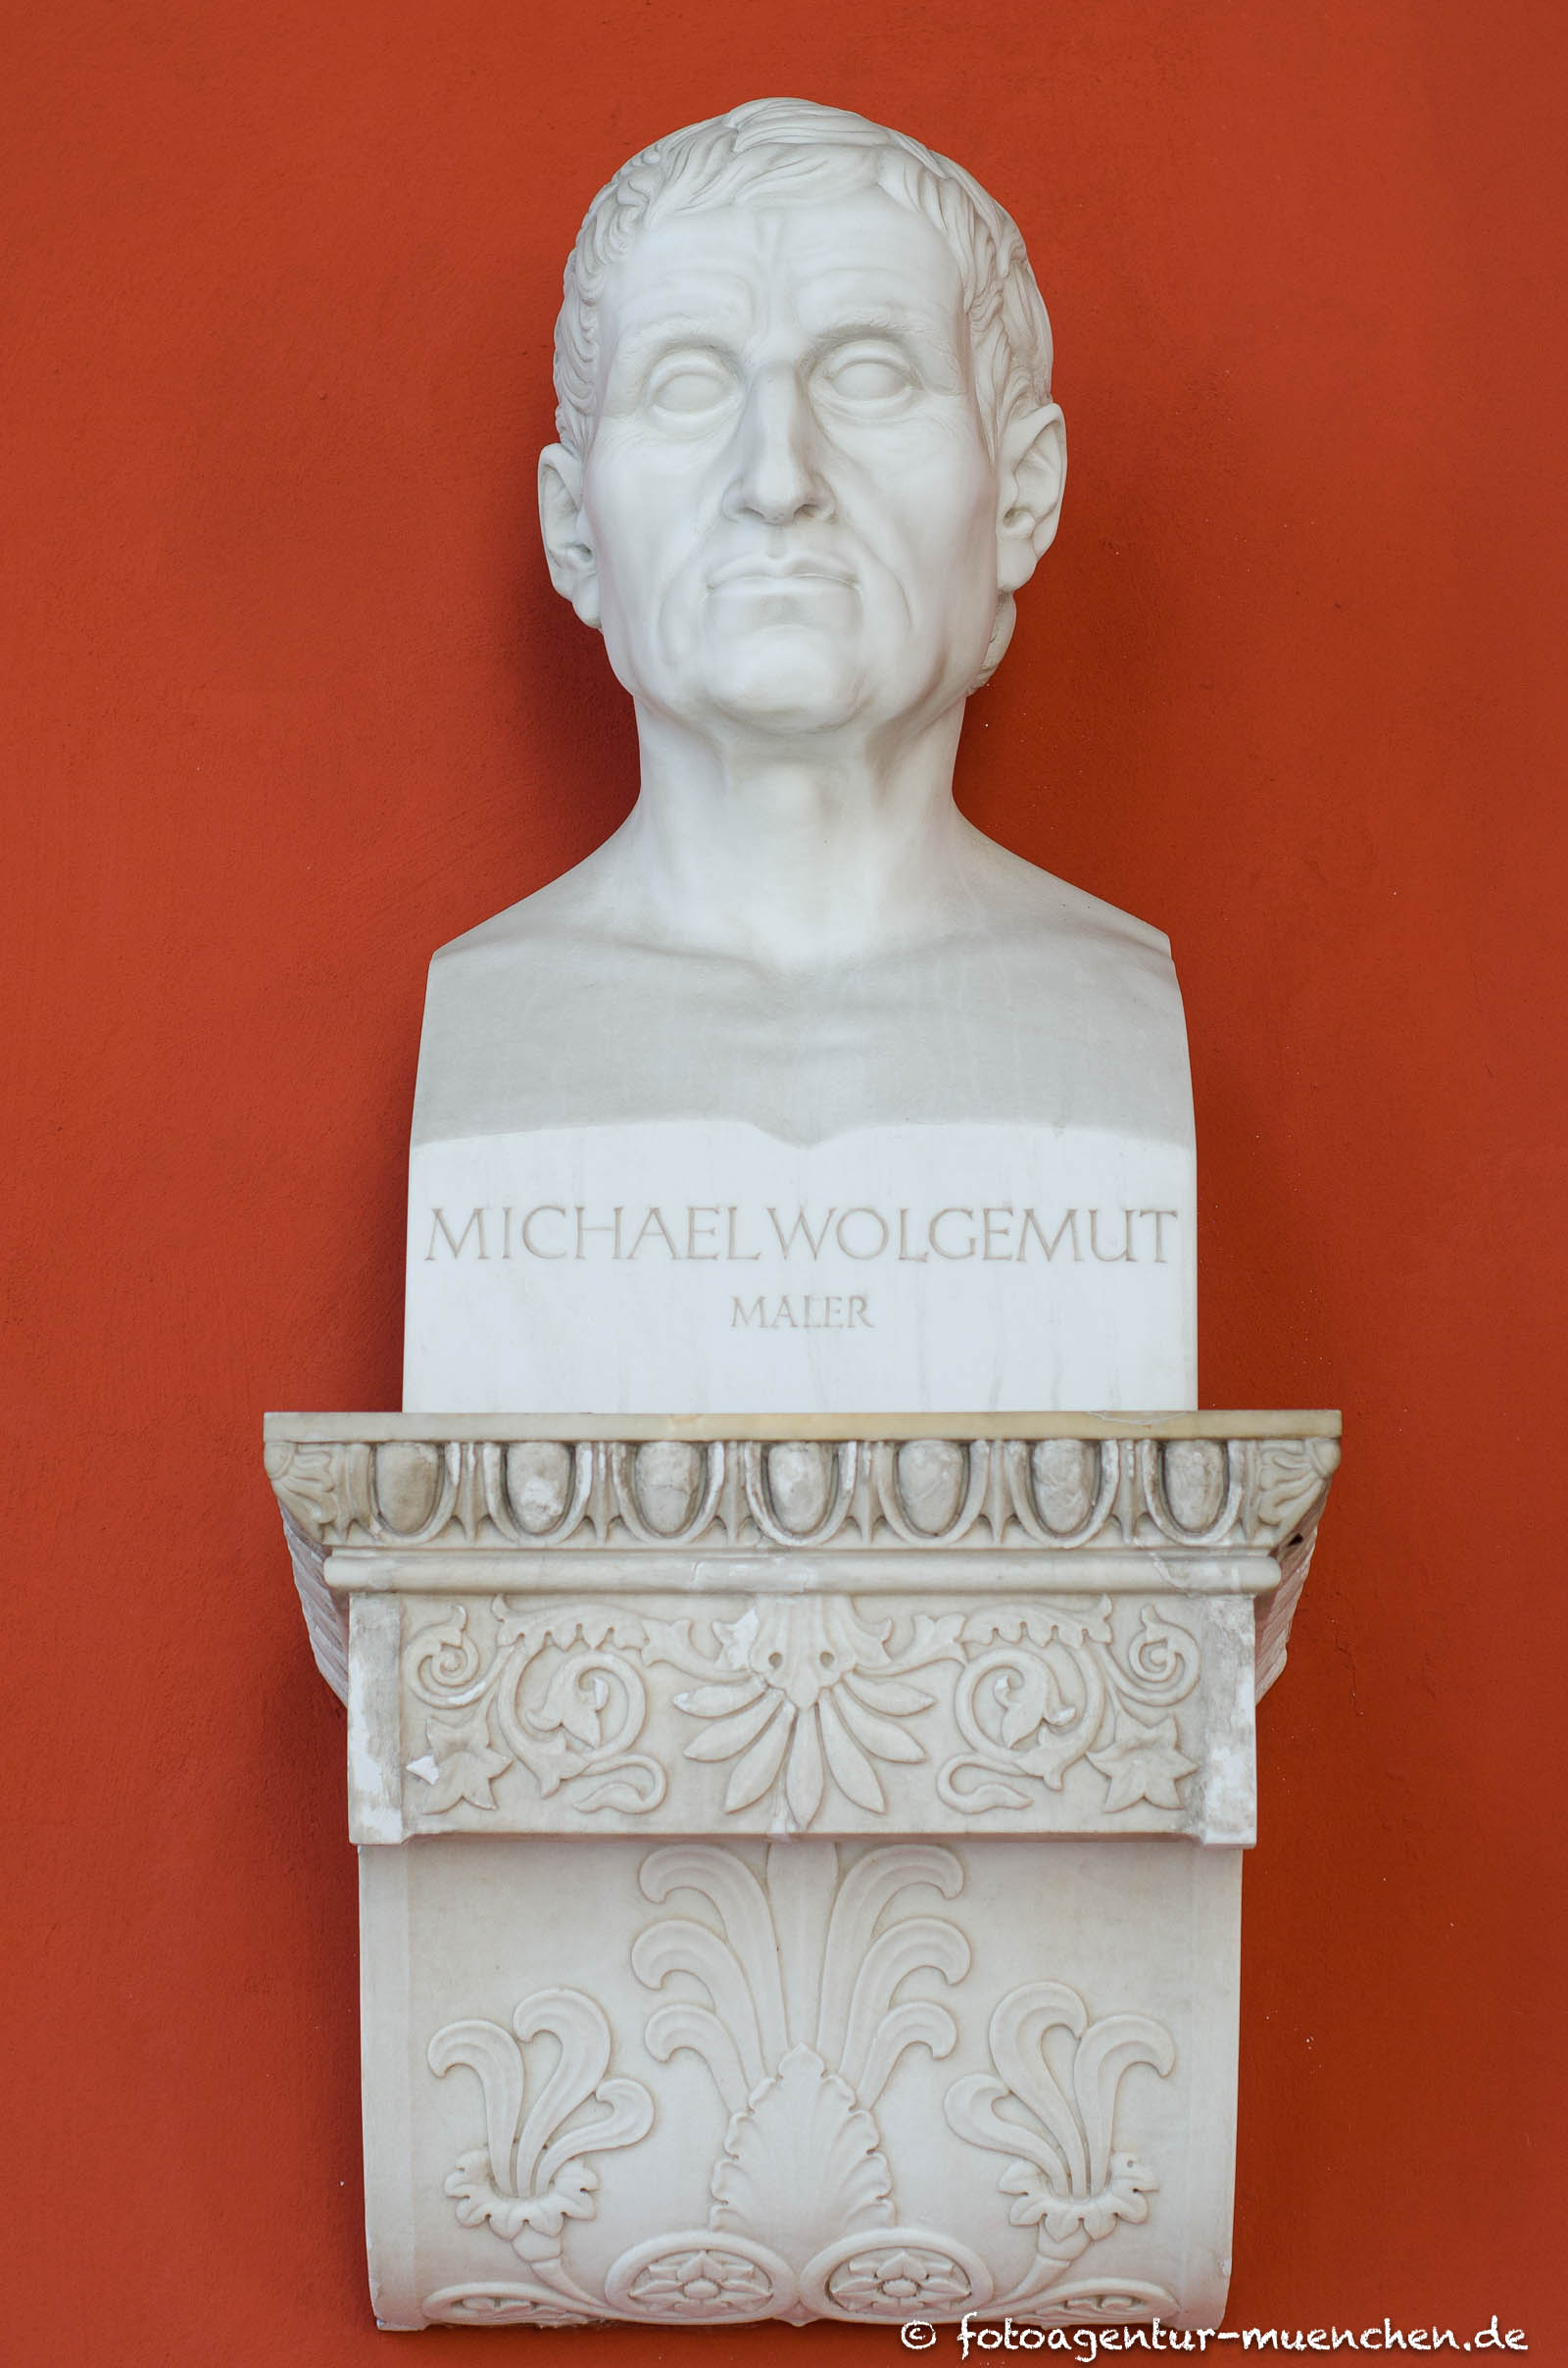 Michael Wolgemuth